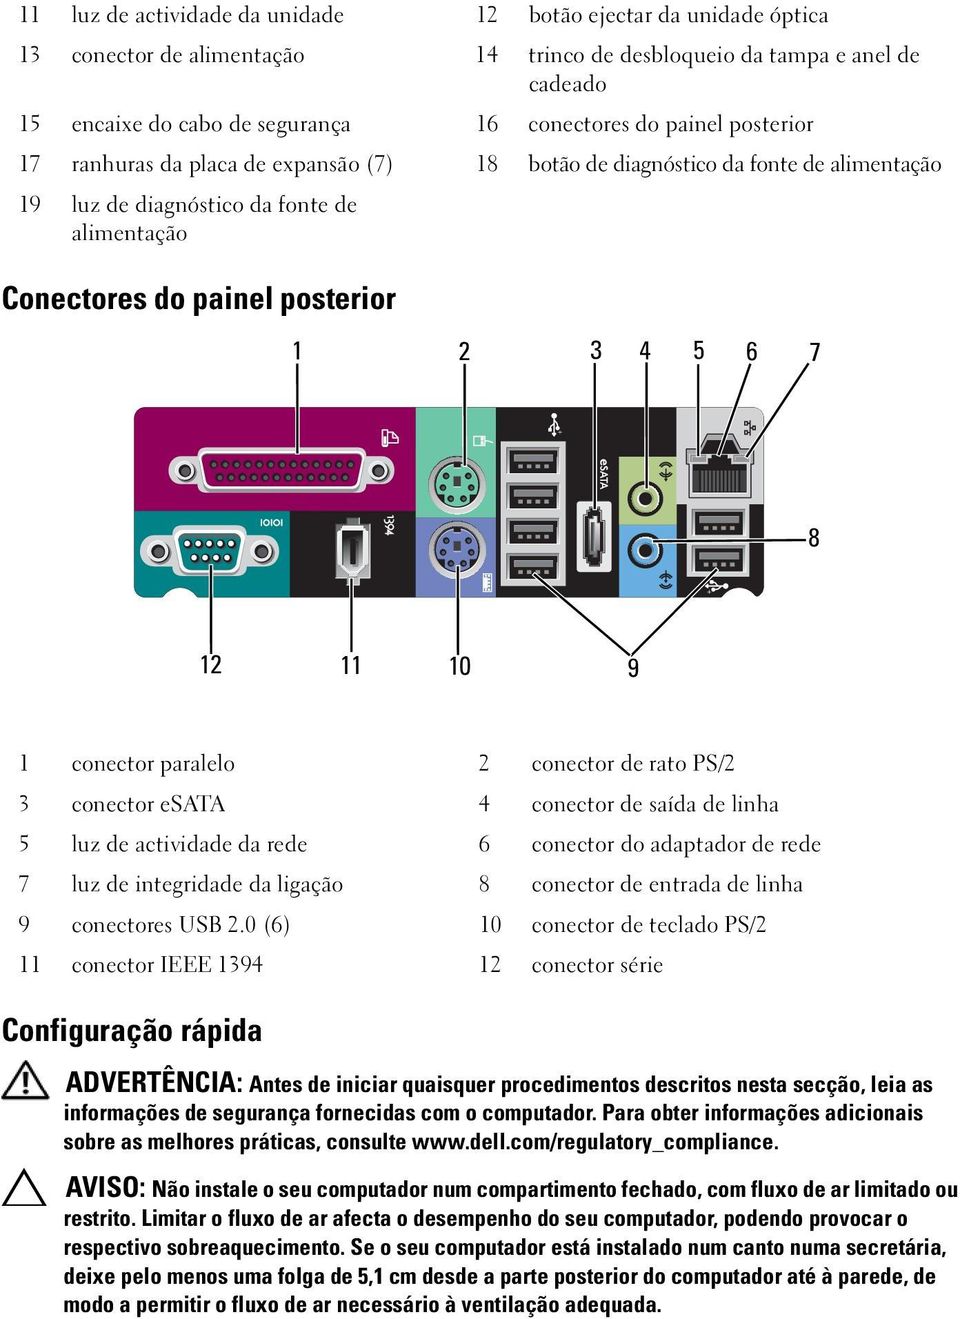 11 10 9 1 conector paralelo 2 conector de rato PS/2 3 conector esata 4 conector de saída de linha 5 luz de actividade da rede 6 conector do adaptador de rede 7 luz de integridade da ligação 8